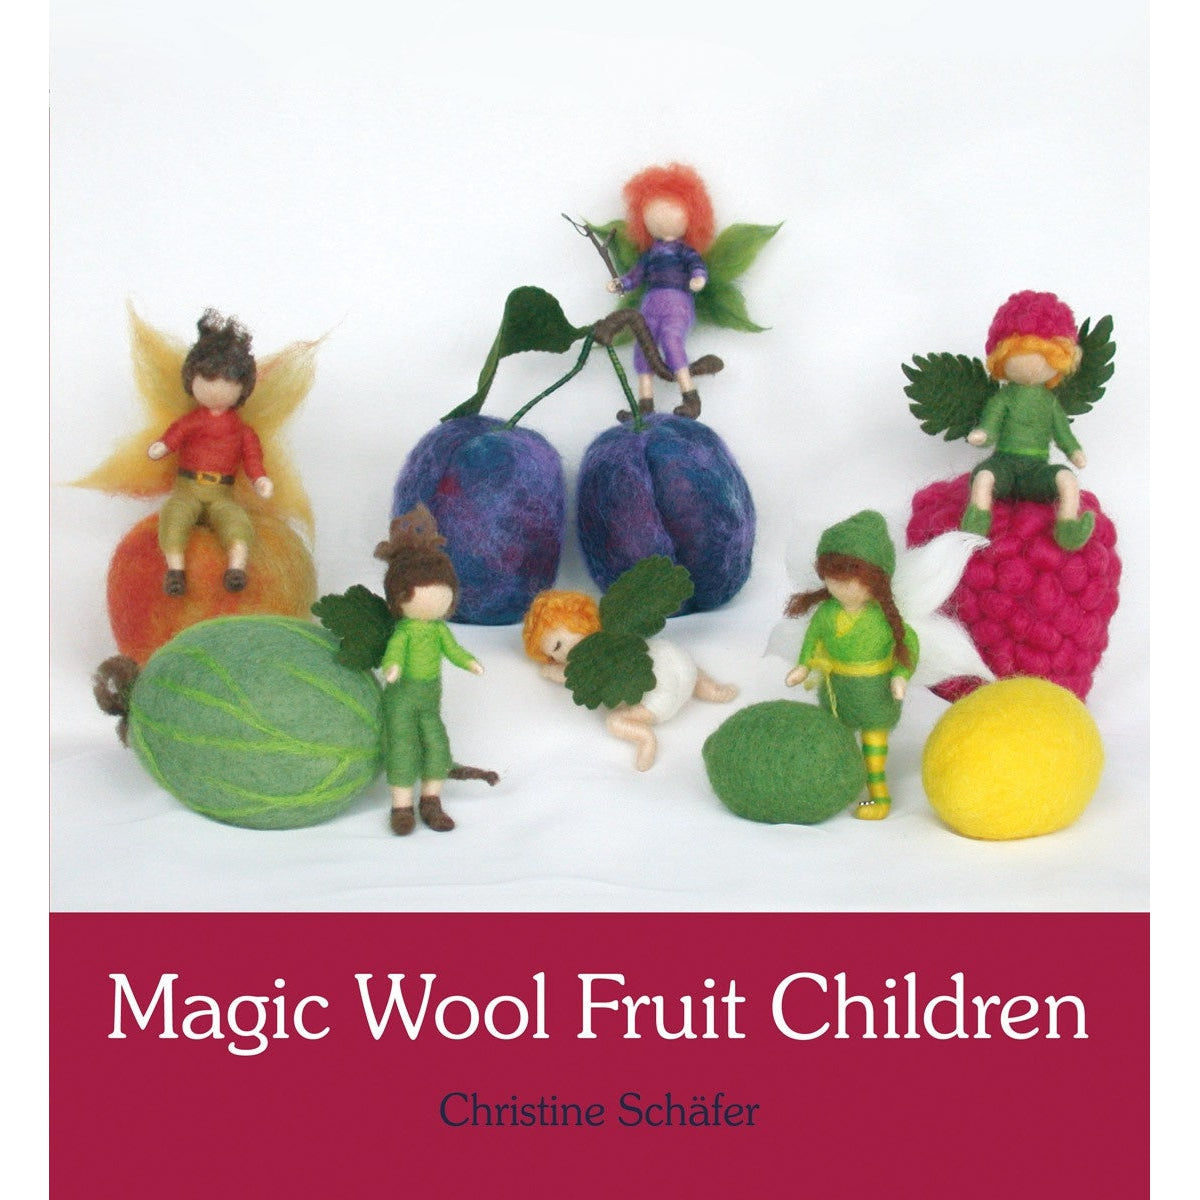 Magic Wool Fruit Children - Christine Schäfer & Translated By Anna Cardwell